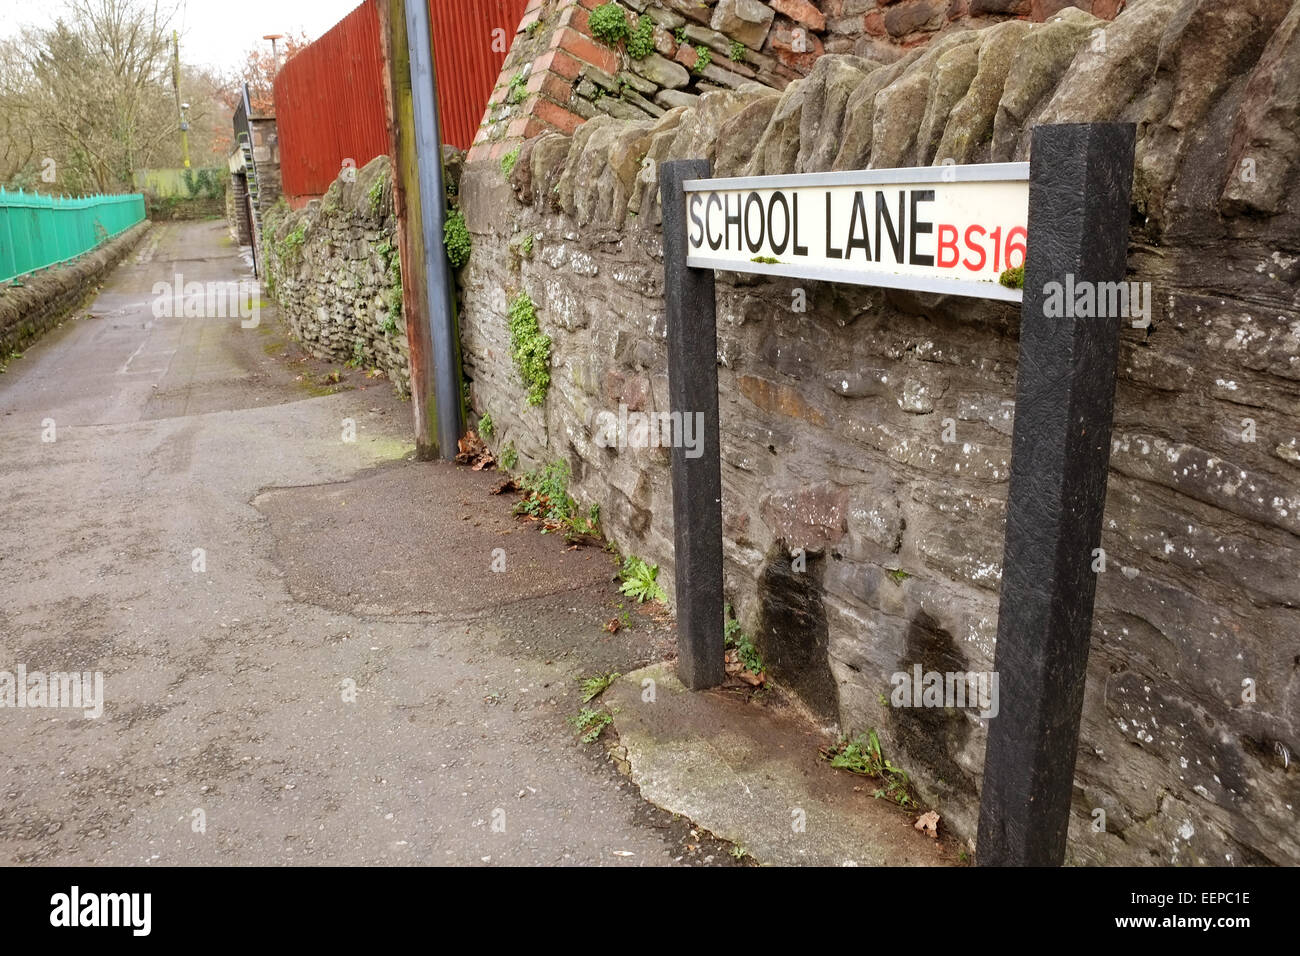 School lane sign in Stapleton Bristol BS16, 20th January 2015 Stock Photo